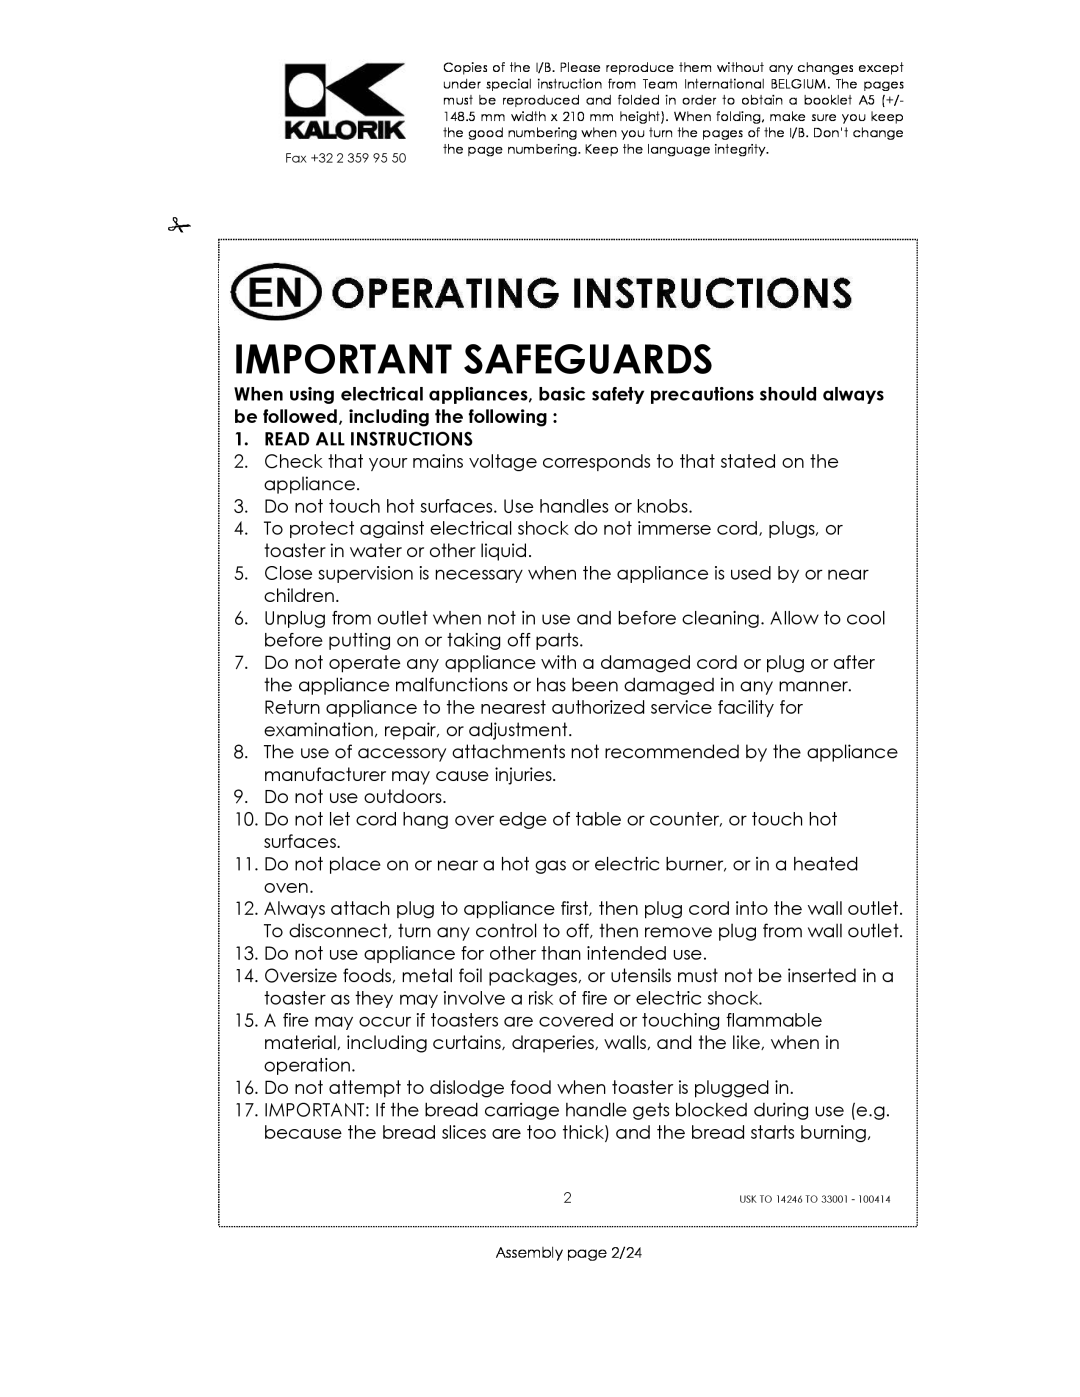 Kalorik 14246 - 33001 manual Important Safeguards, Read All Instructions 